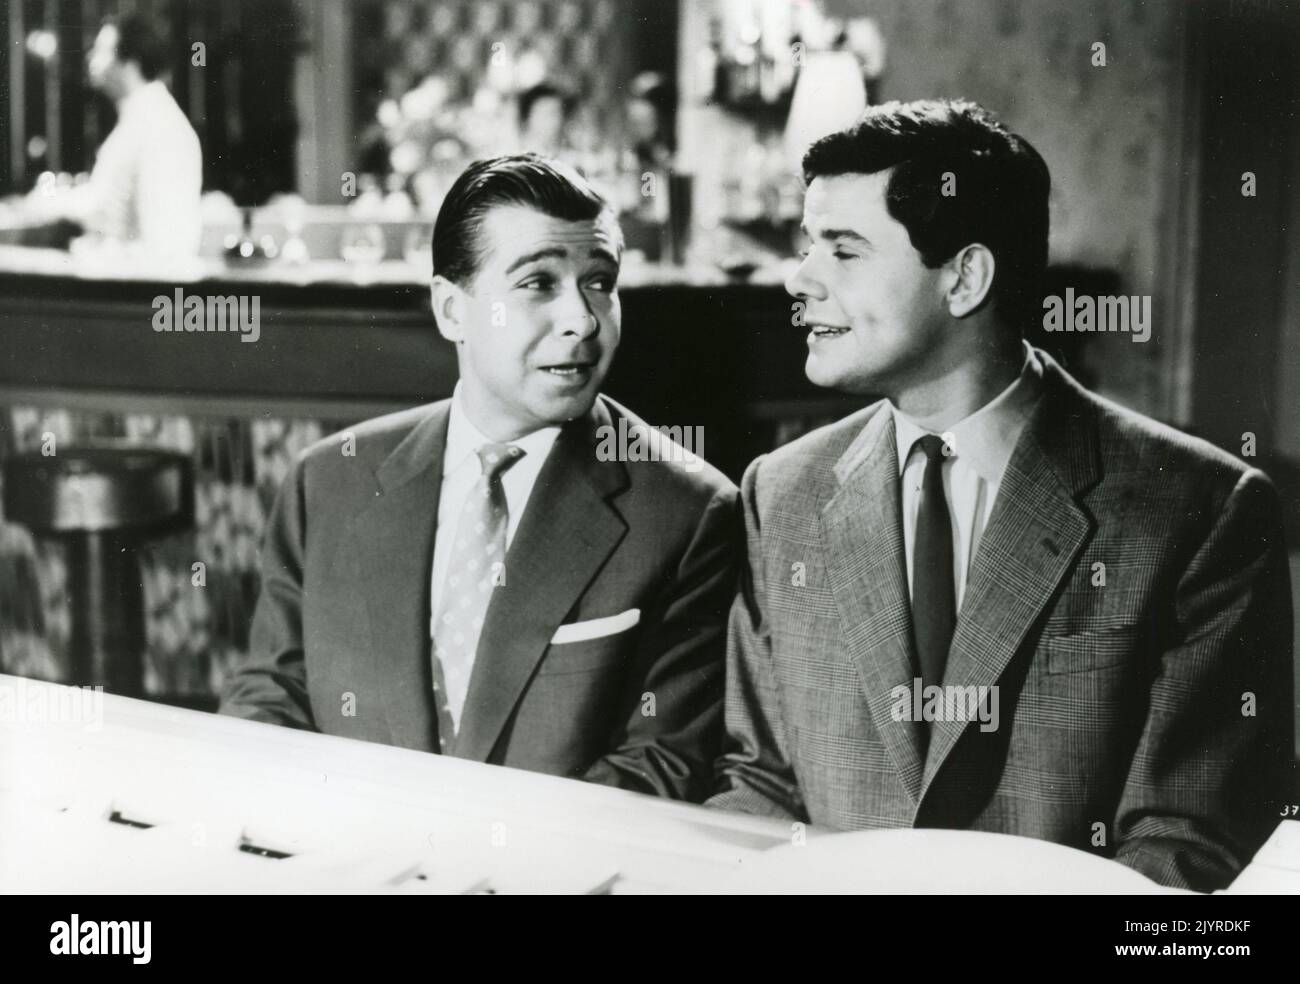 Actors Bully Buhlan and Walter Giller in the movie Ich und meine Schwiegersohne, Germany 1956 Stock Photo